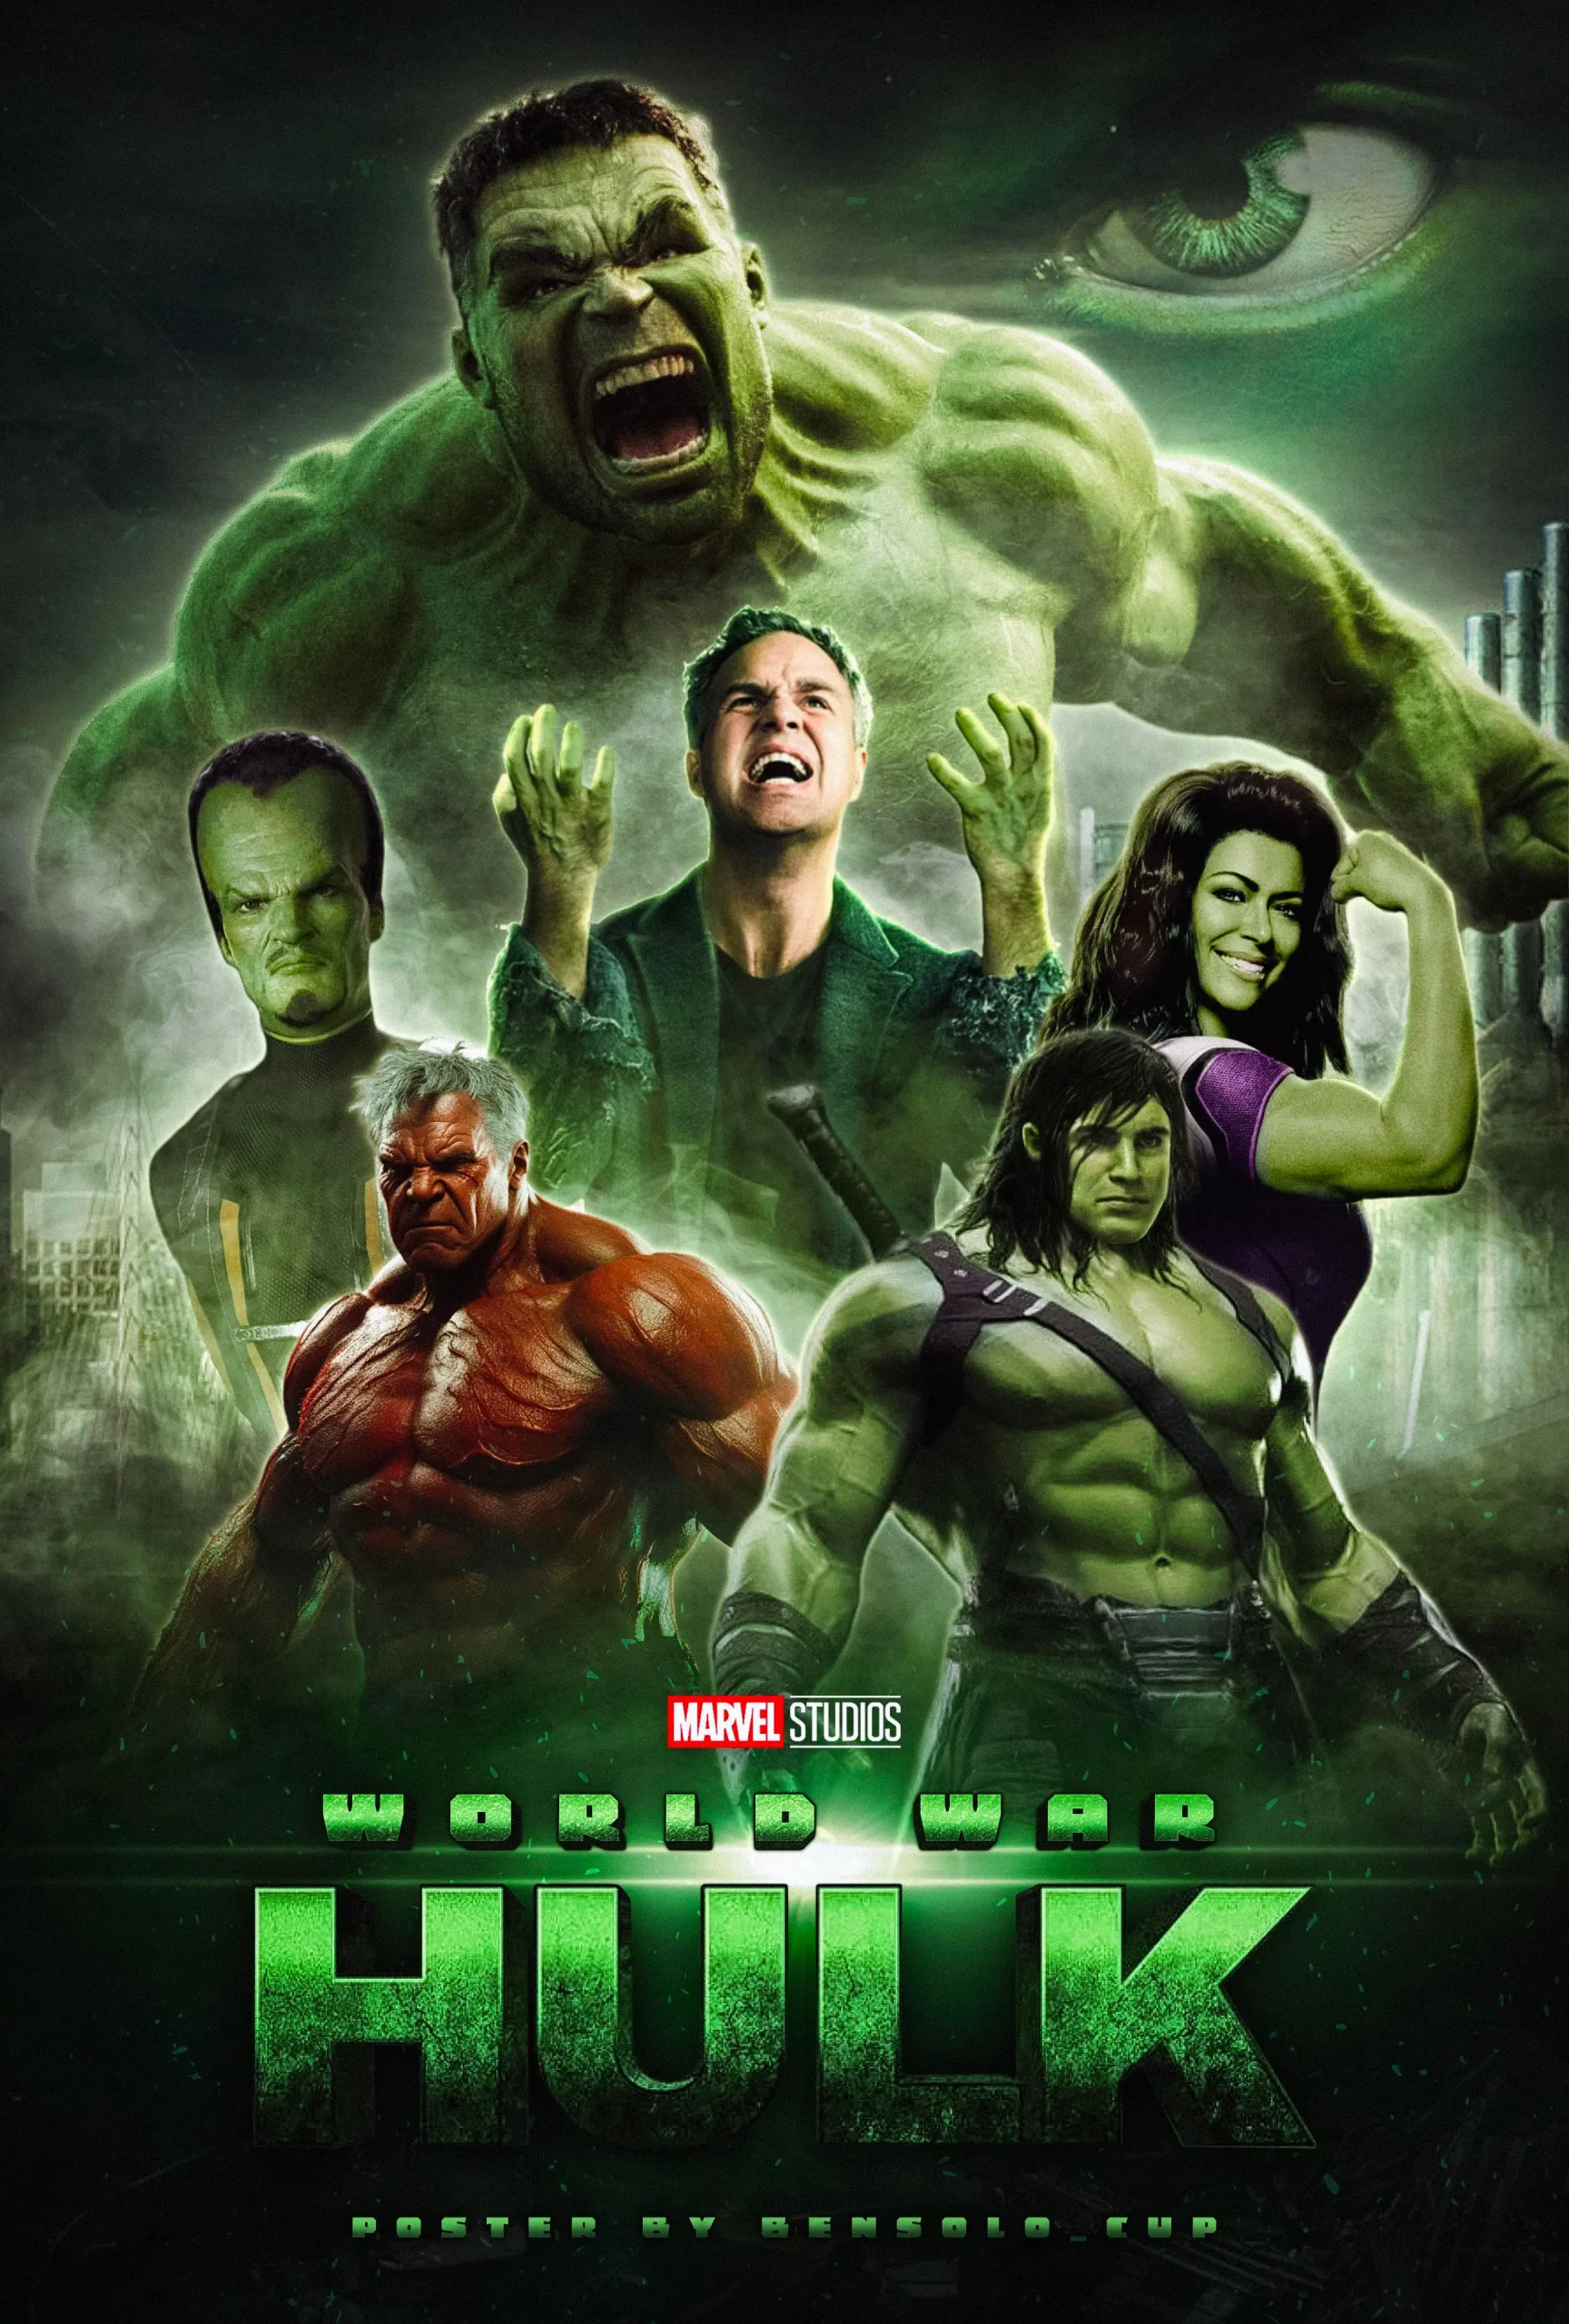 poster-incrivel-hulk-contra-o-mundo-legadodamarvel-scaled.webp